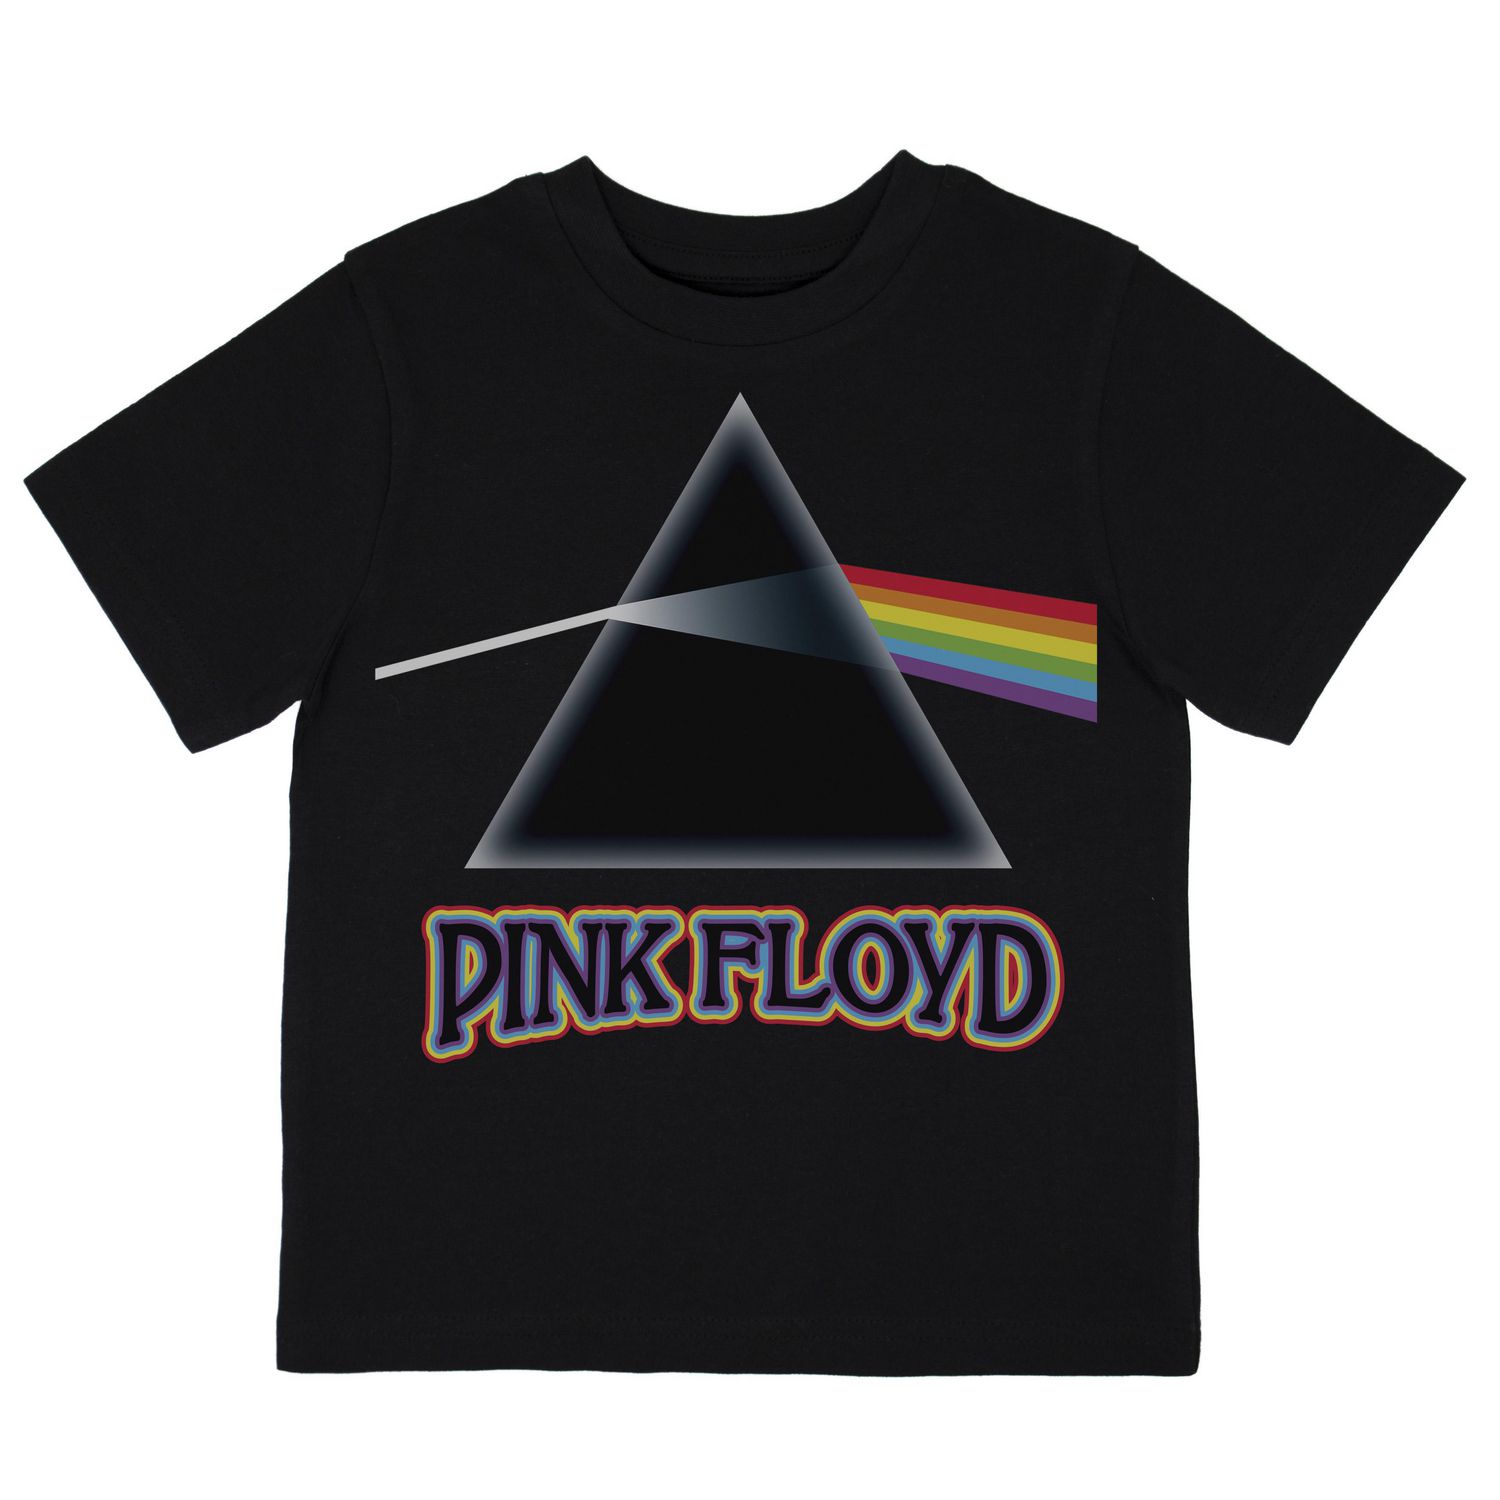 Pink Floyd Boy's Toddler Short Sleeve T-Shirt | Walmart Canada